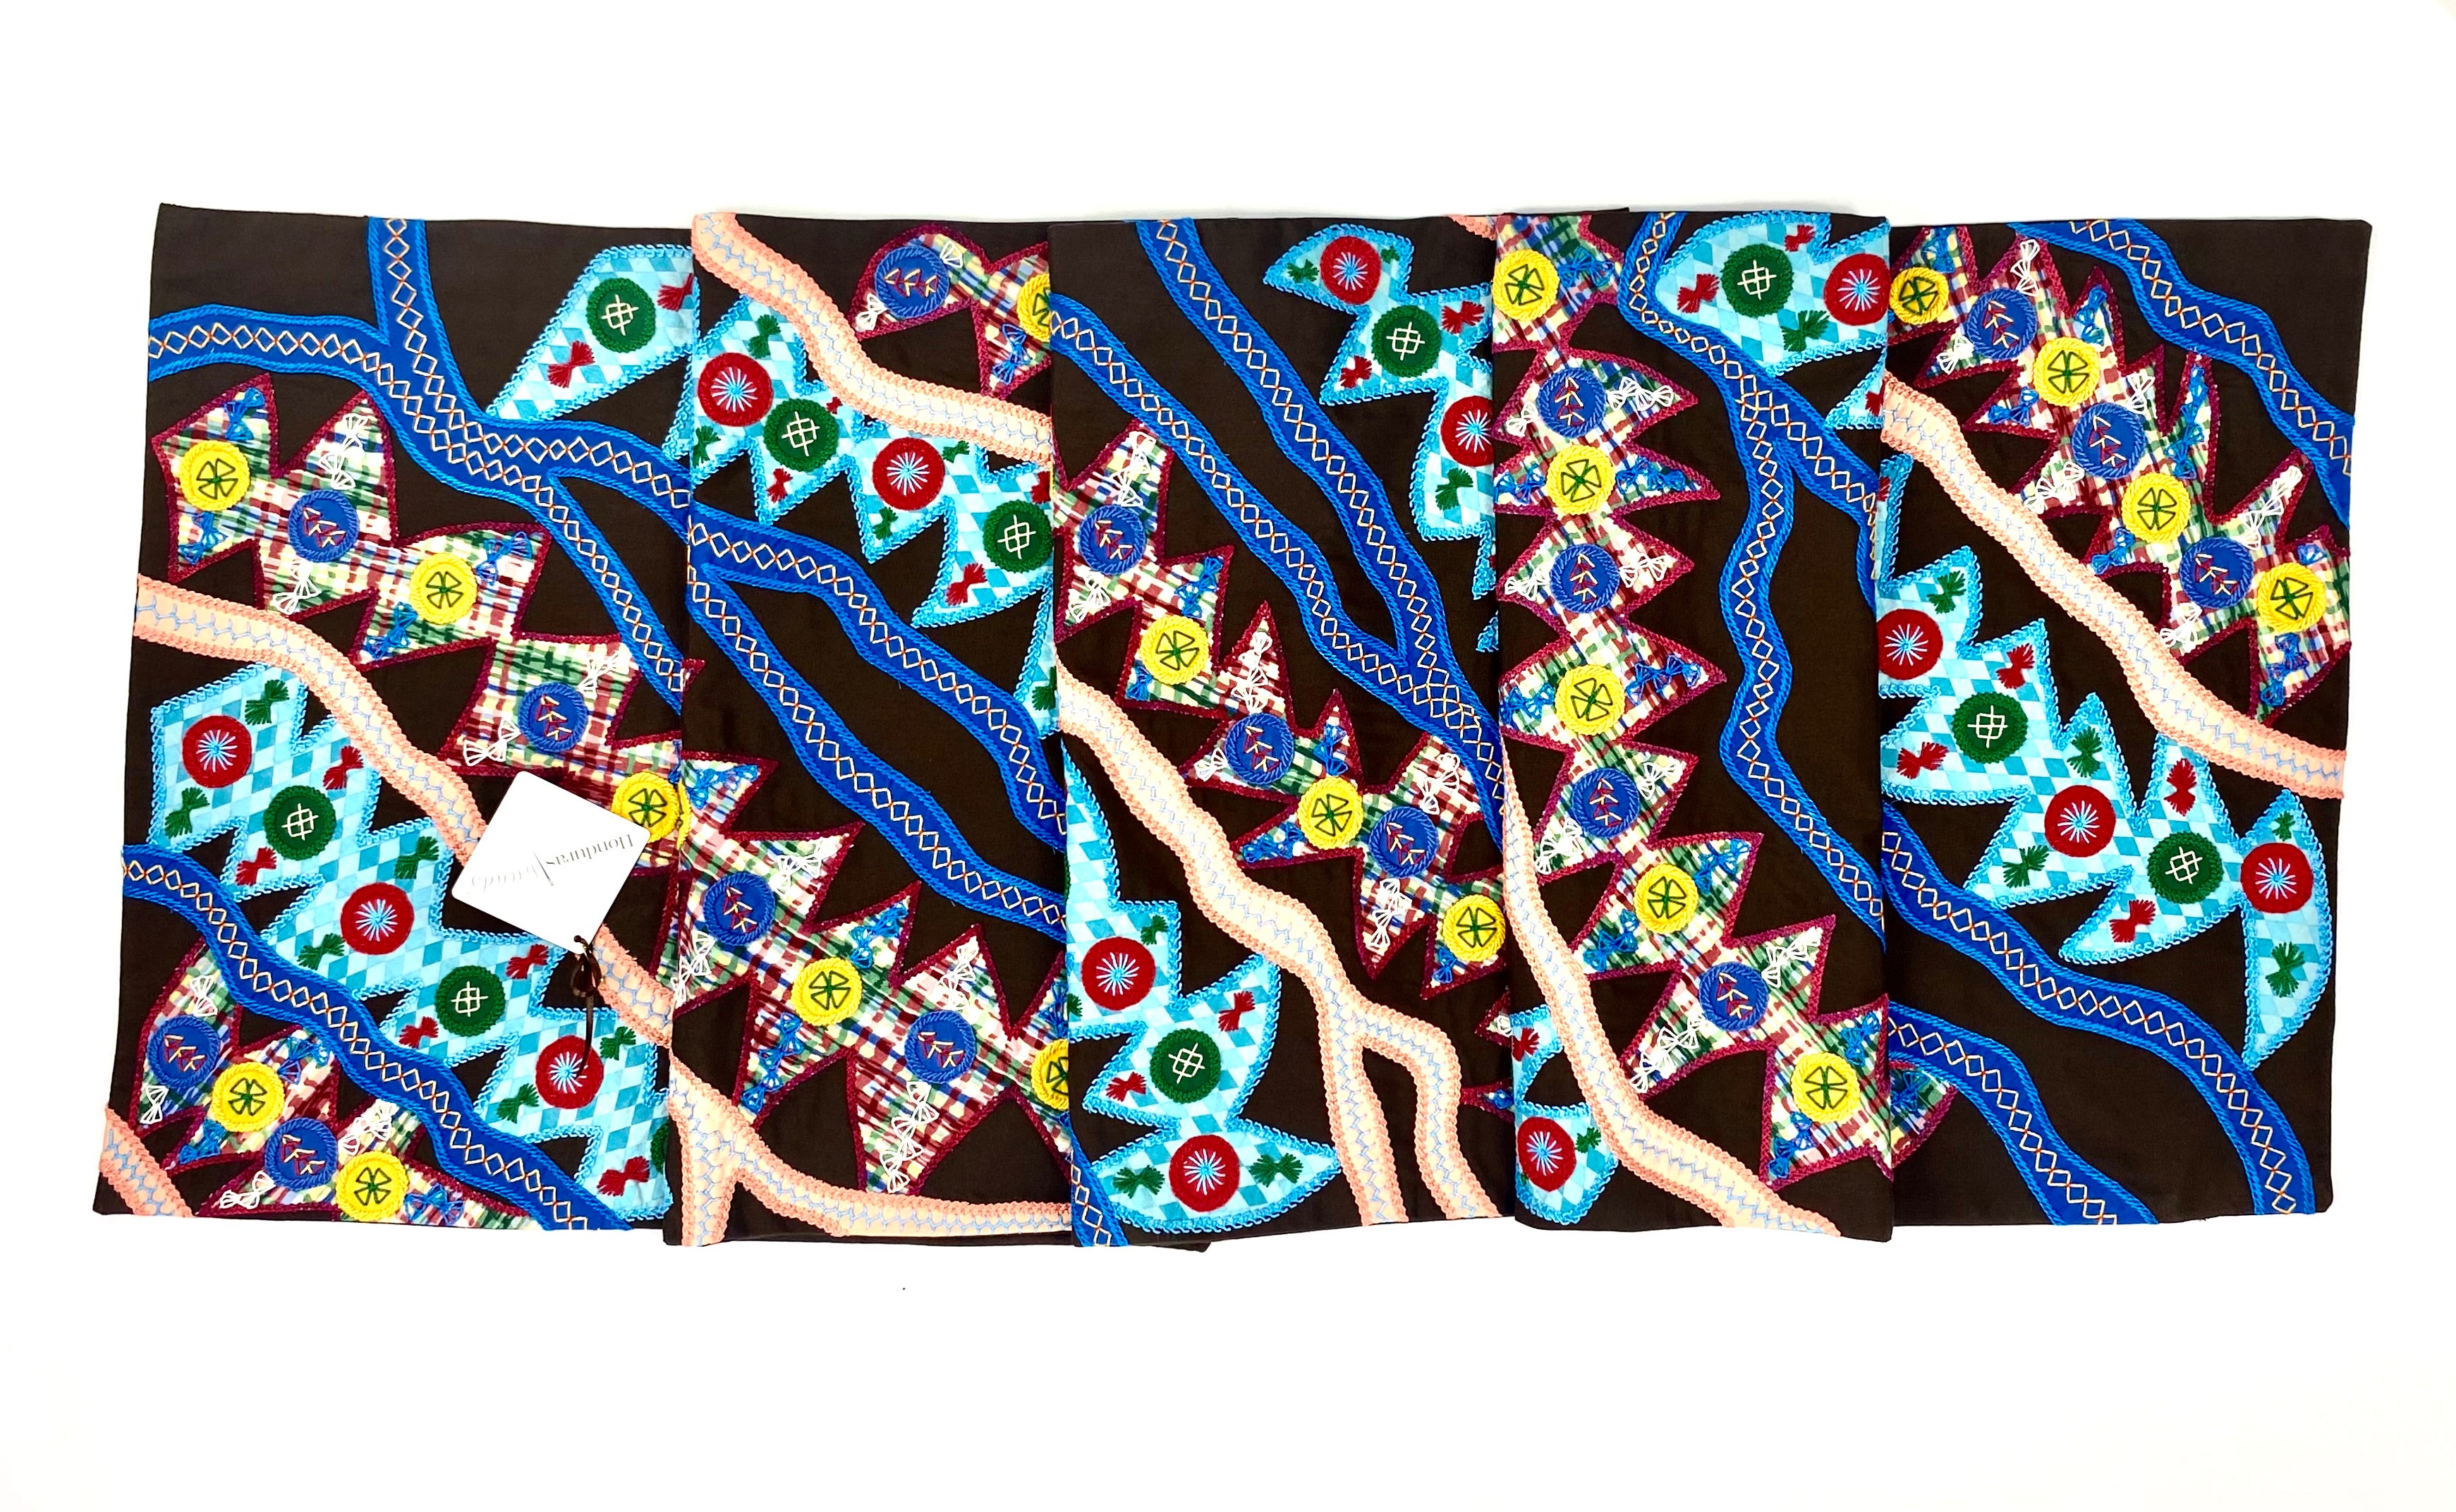 Hojas en el Rio Design Embroidered Table Runner on dark chocolate Honduras Threads